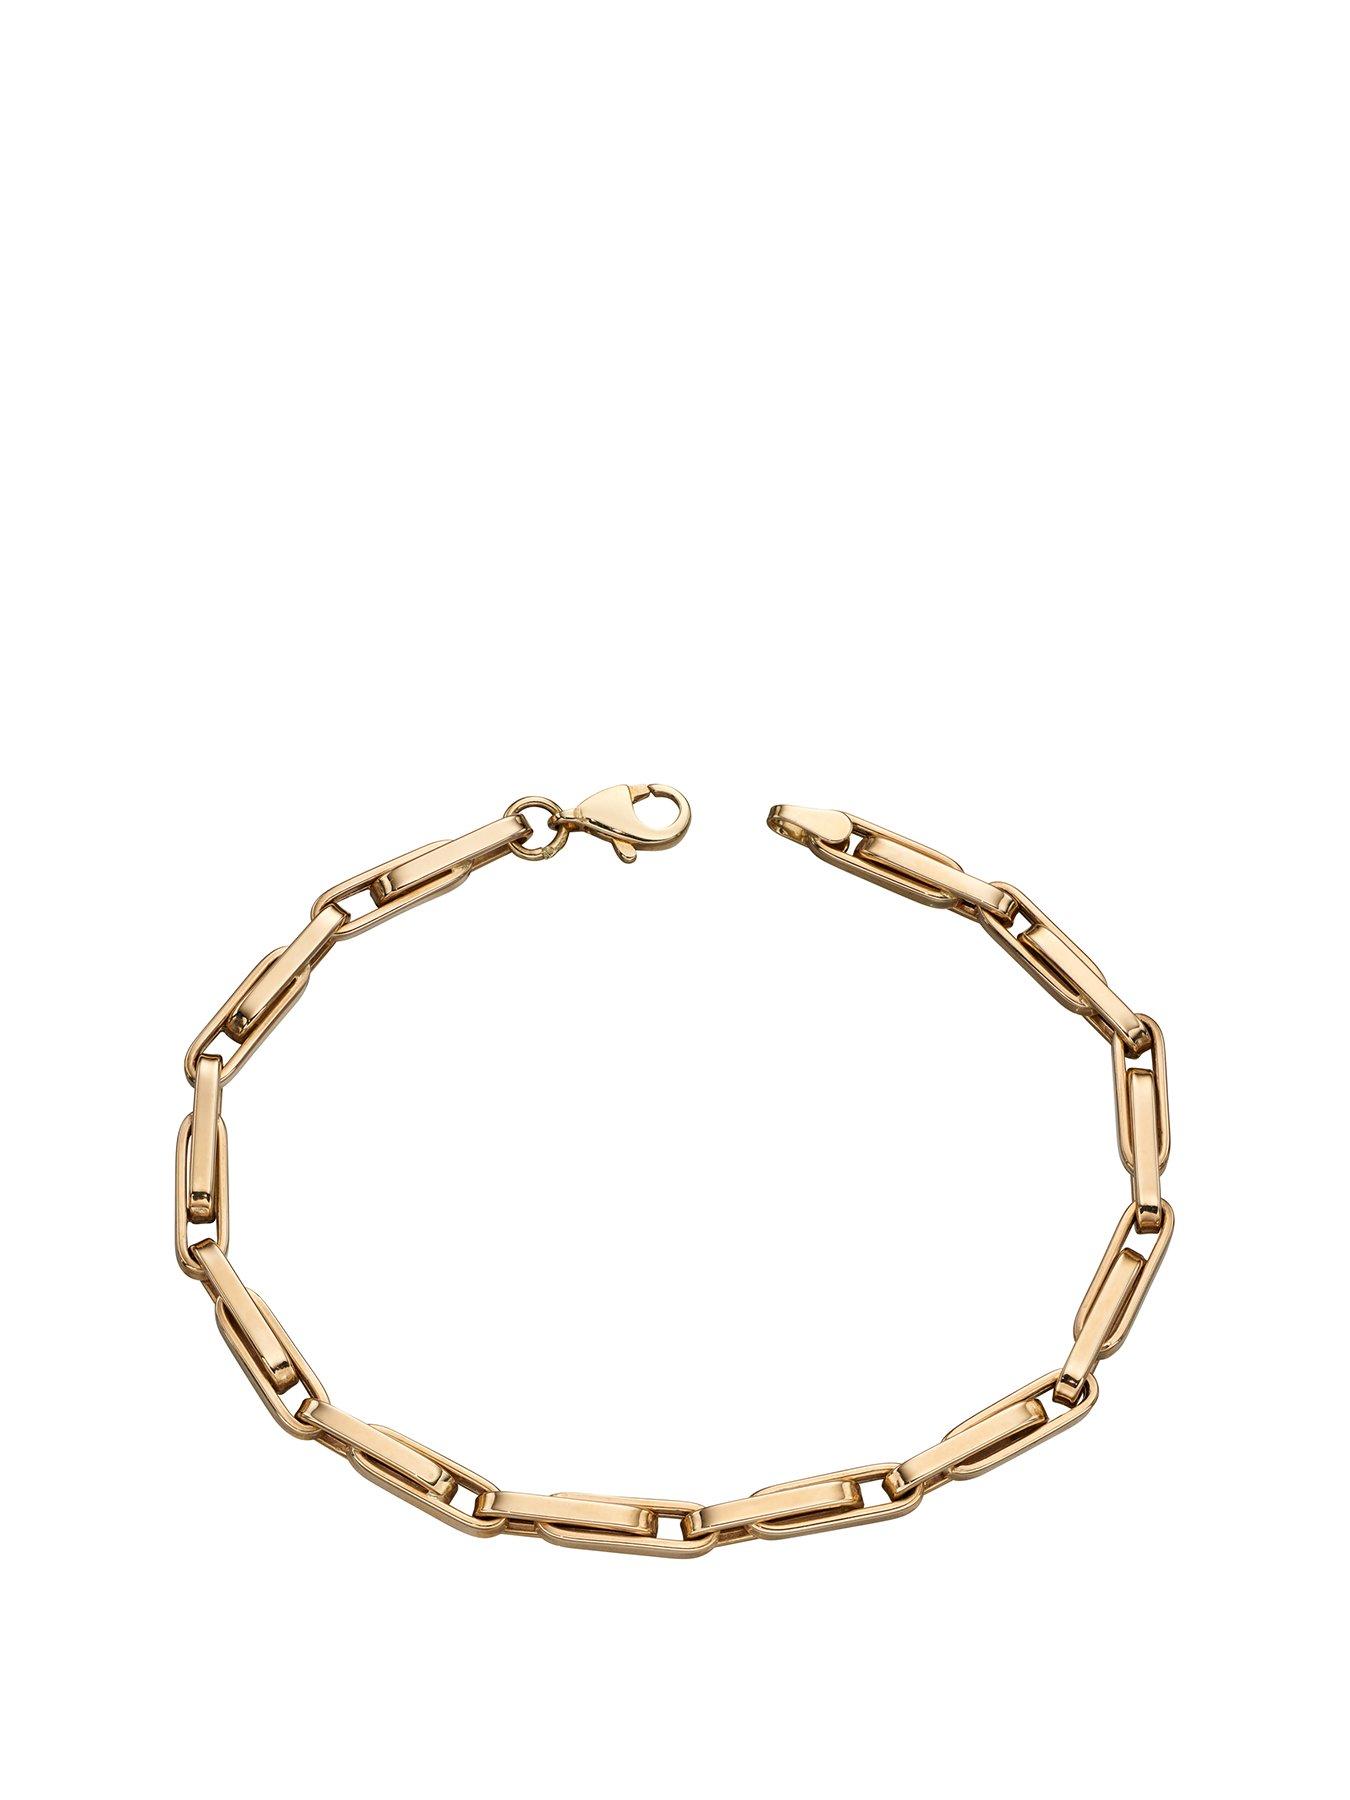  9ct Yellow Gold Long Links Bracelet, Length 19.5cm